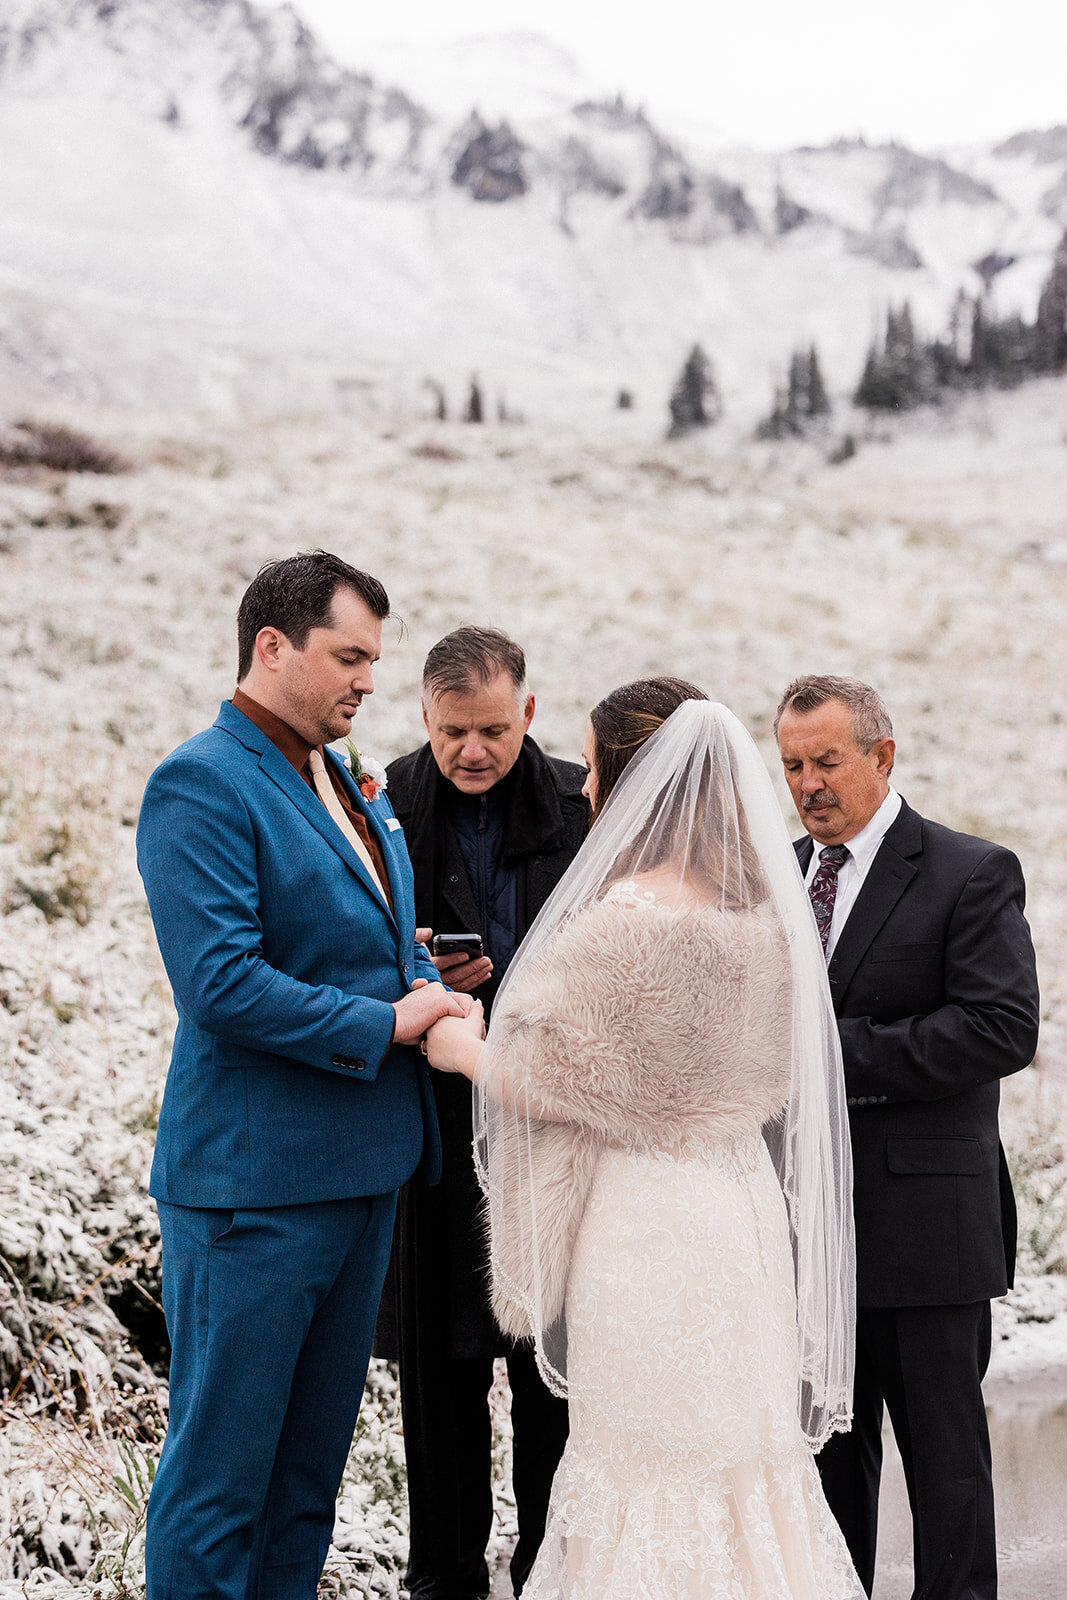 Rainy-Mount-Rainier-National-Park-Intimate-Wedding-89